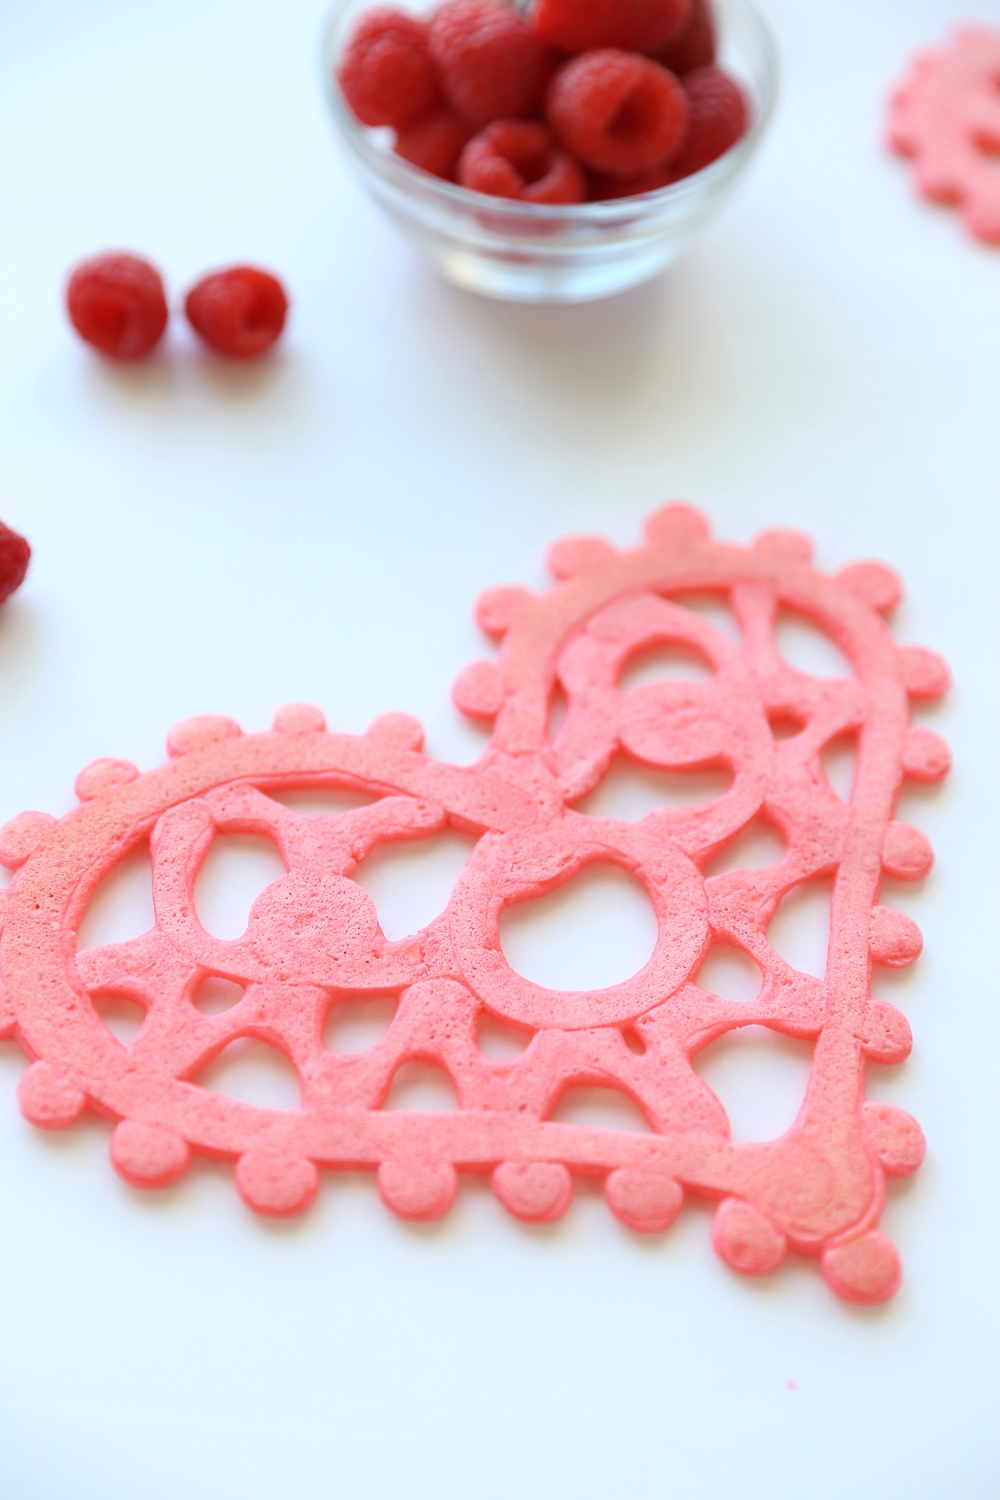 Pink lace pancake in a heart shape